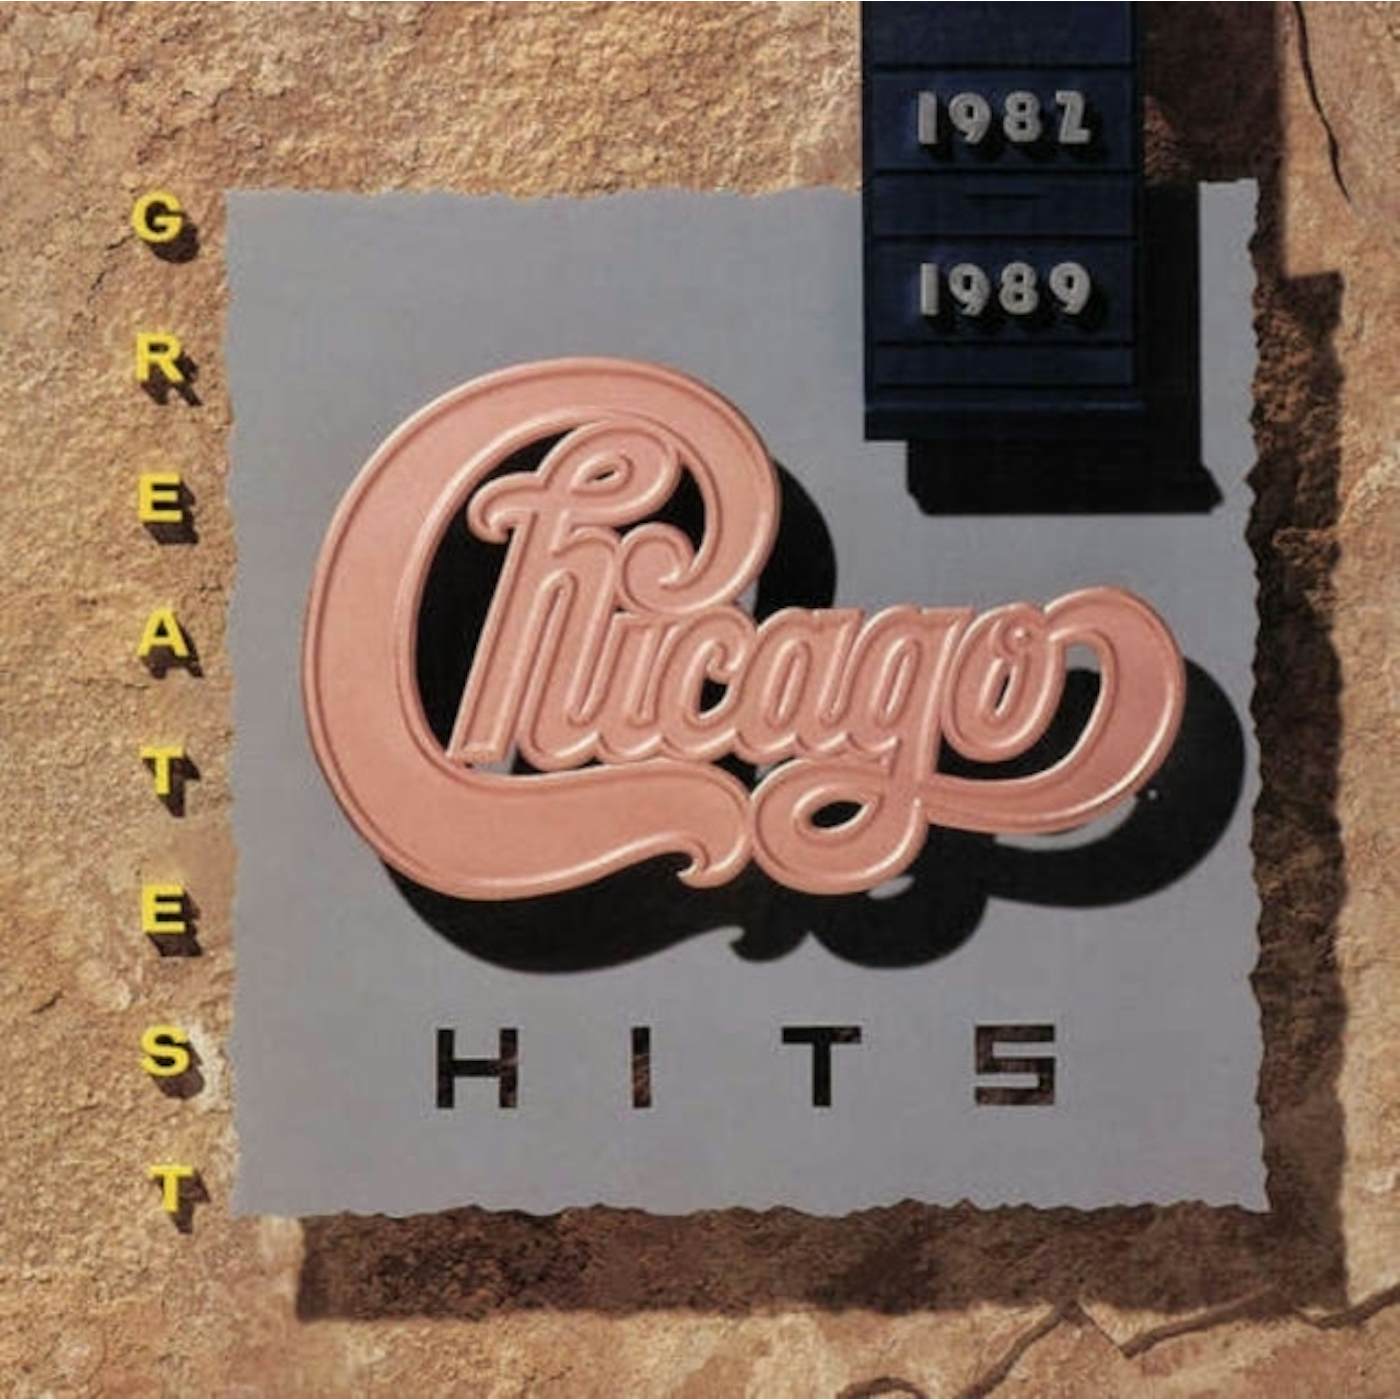 Chicago LP Vinyl Record - Greatest Hits 19 82 - 19 89